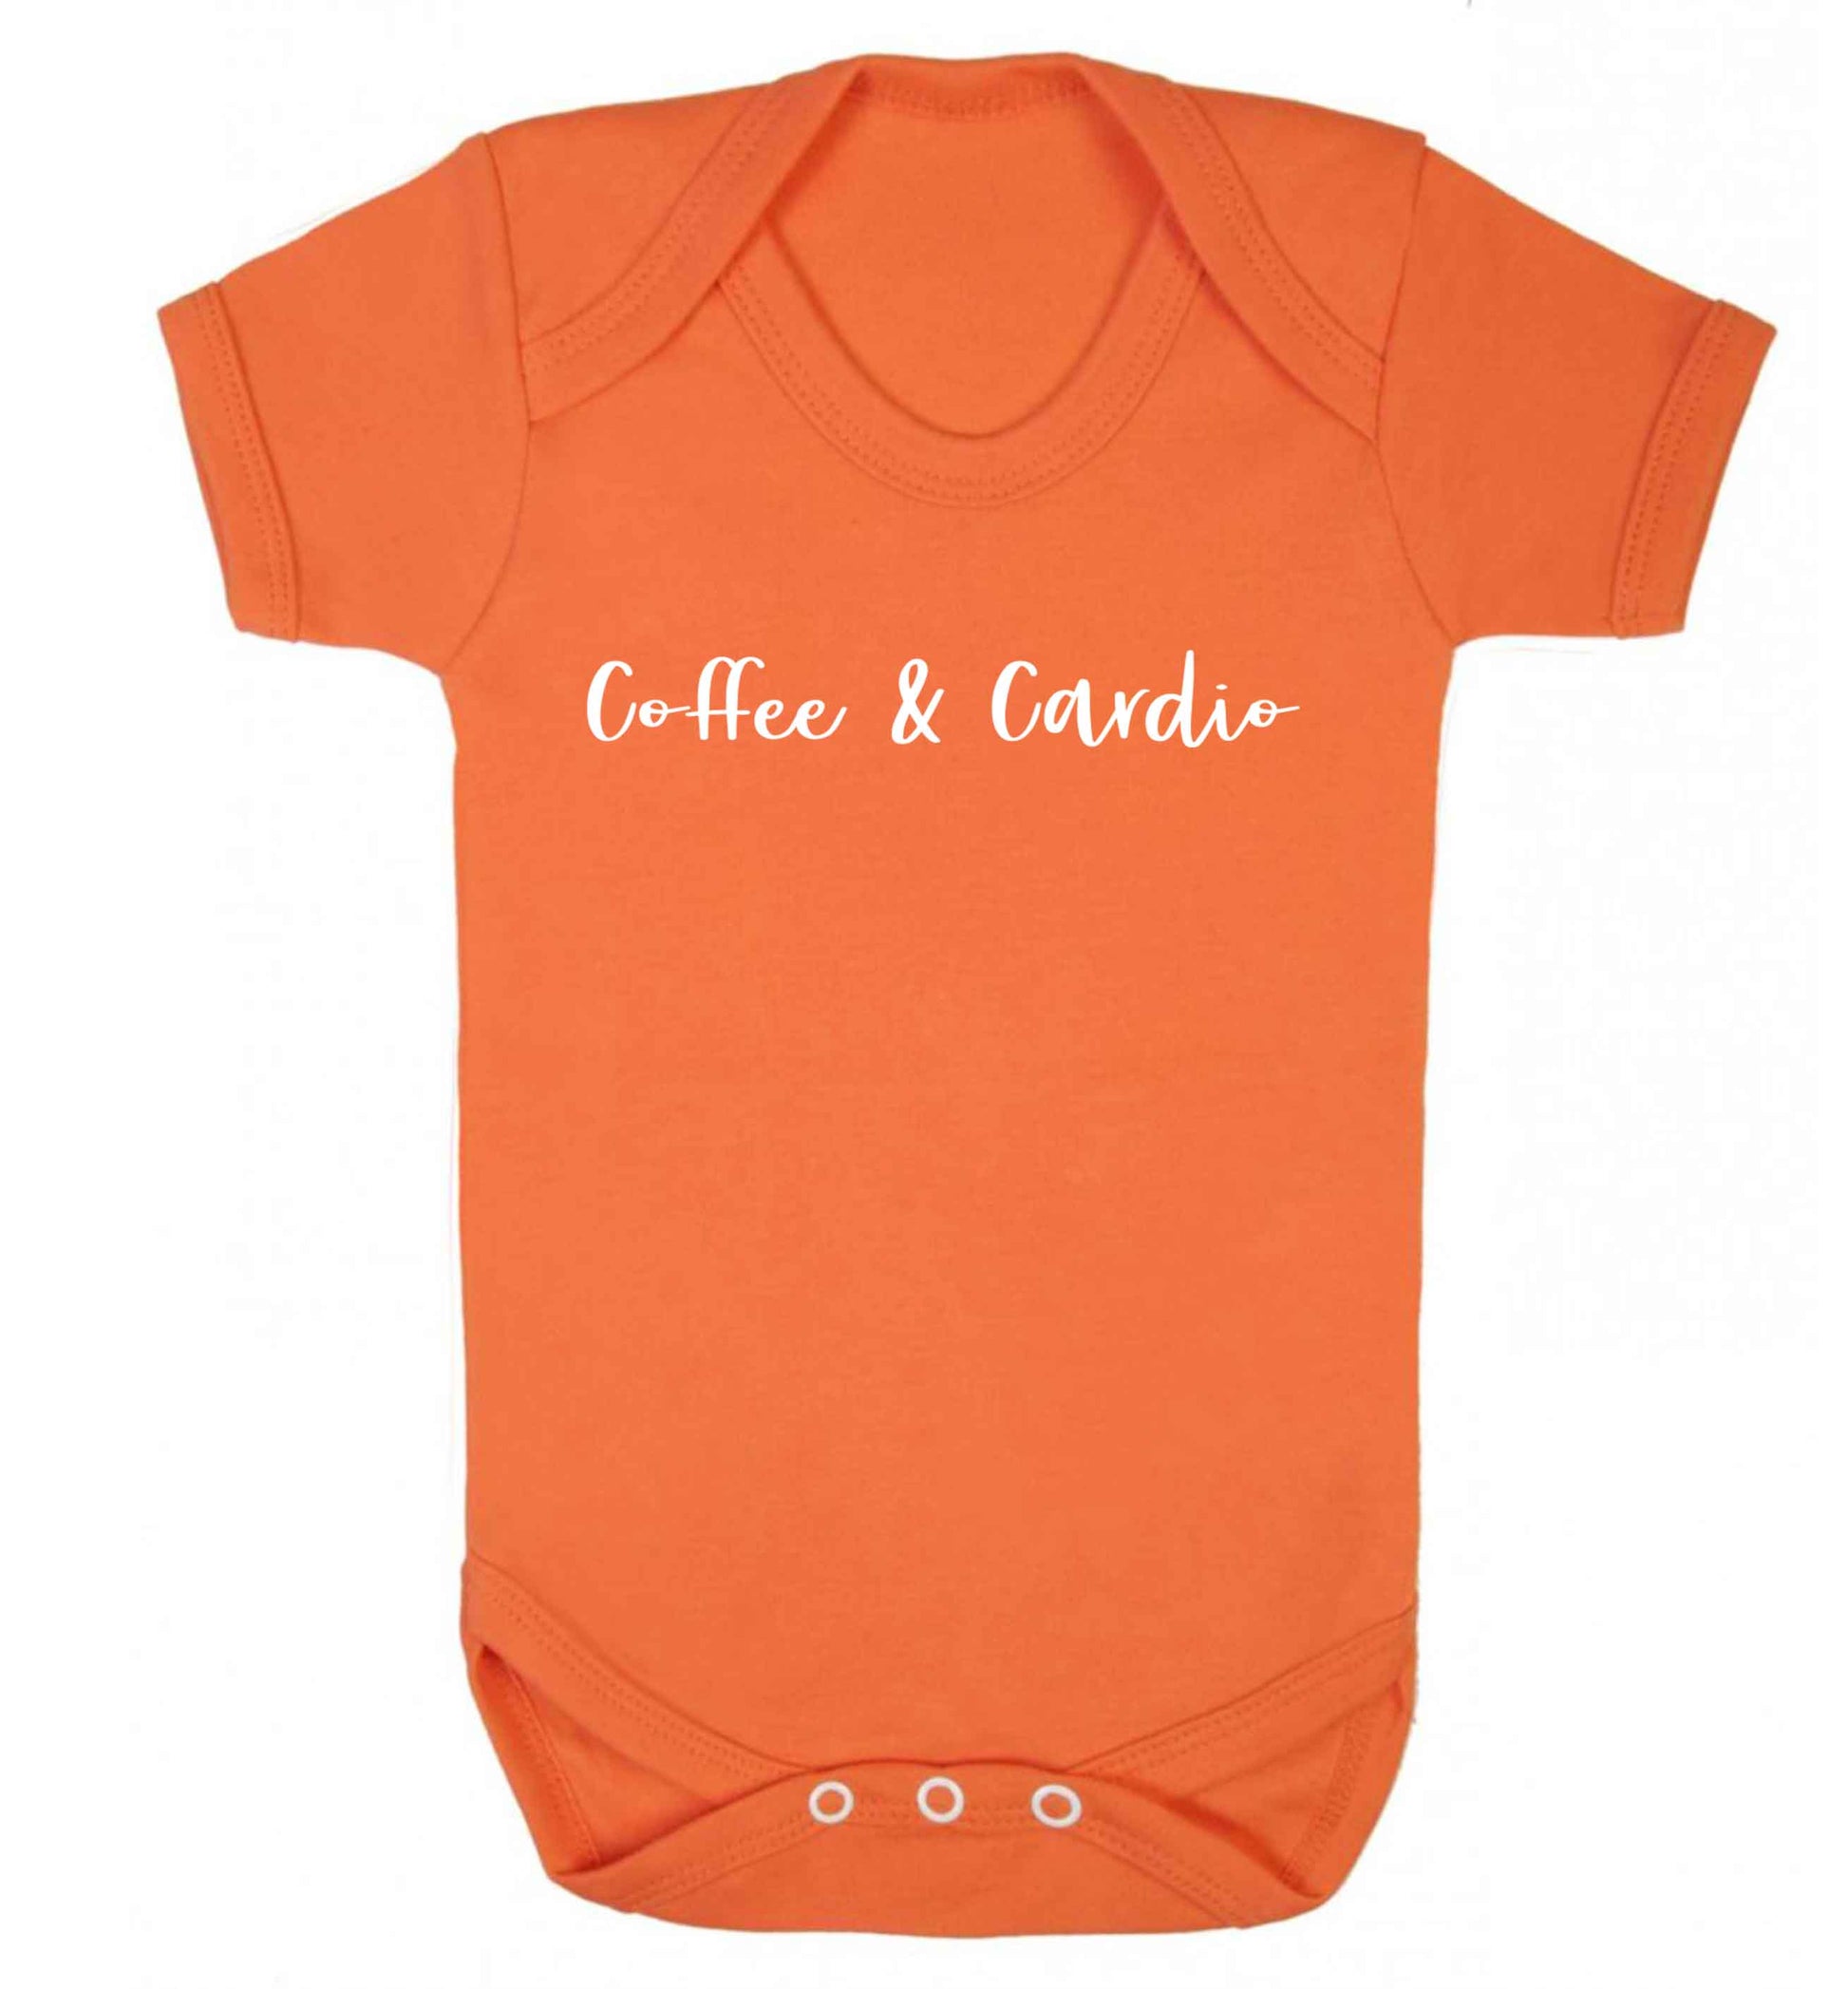 Coffee and cardio Baby Vest orange 18-24 months